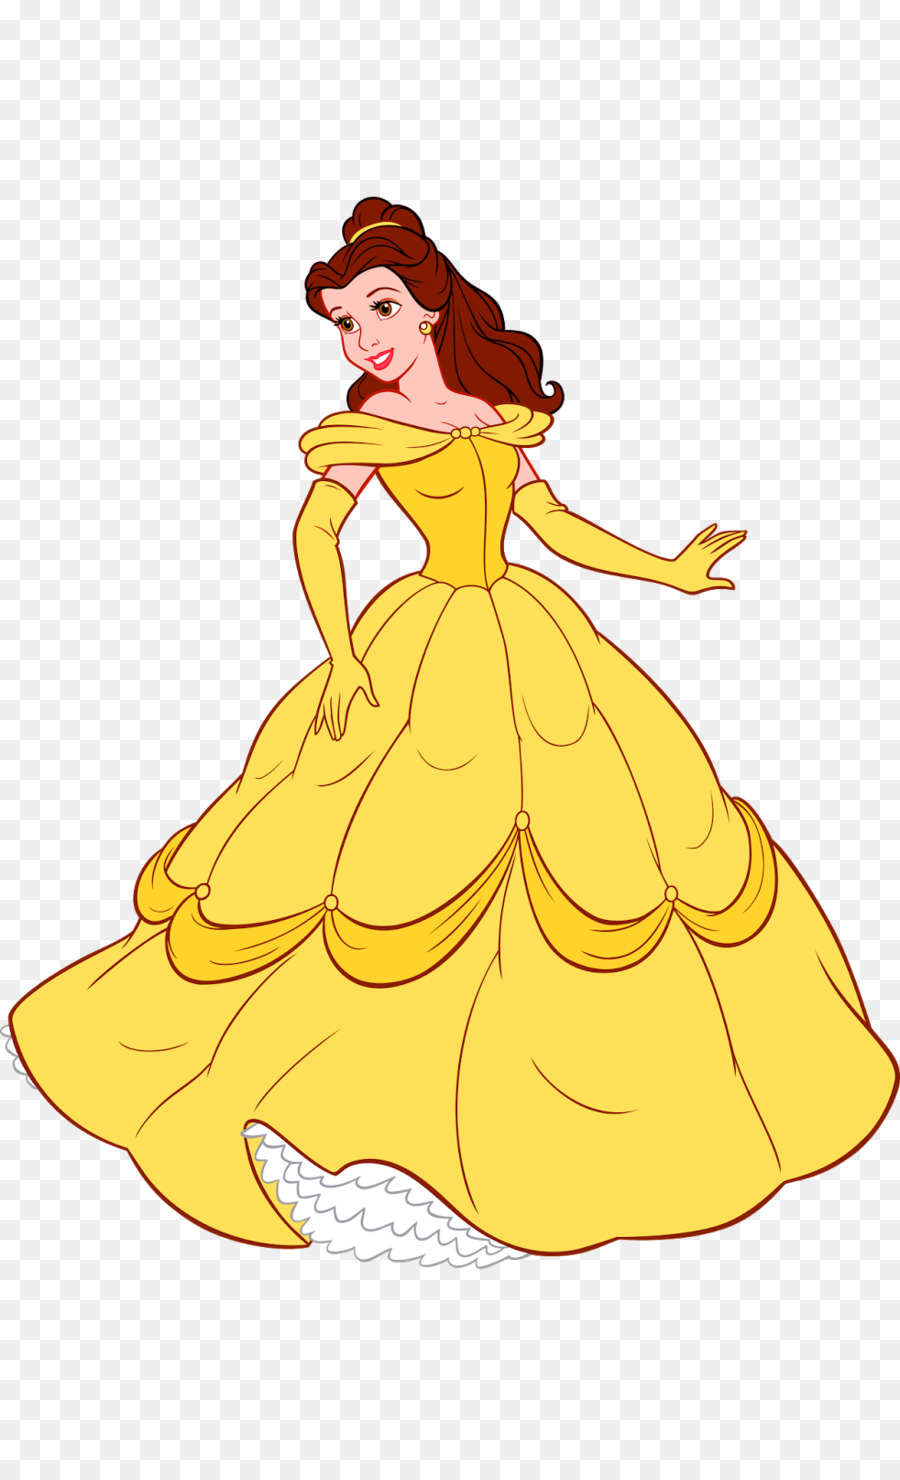 Princess Aurora Belle Rapunzel Ariel Tiana - disney princess png download - 982*1600 - Free Transparent Princess Aurora png Download.